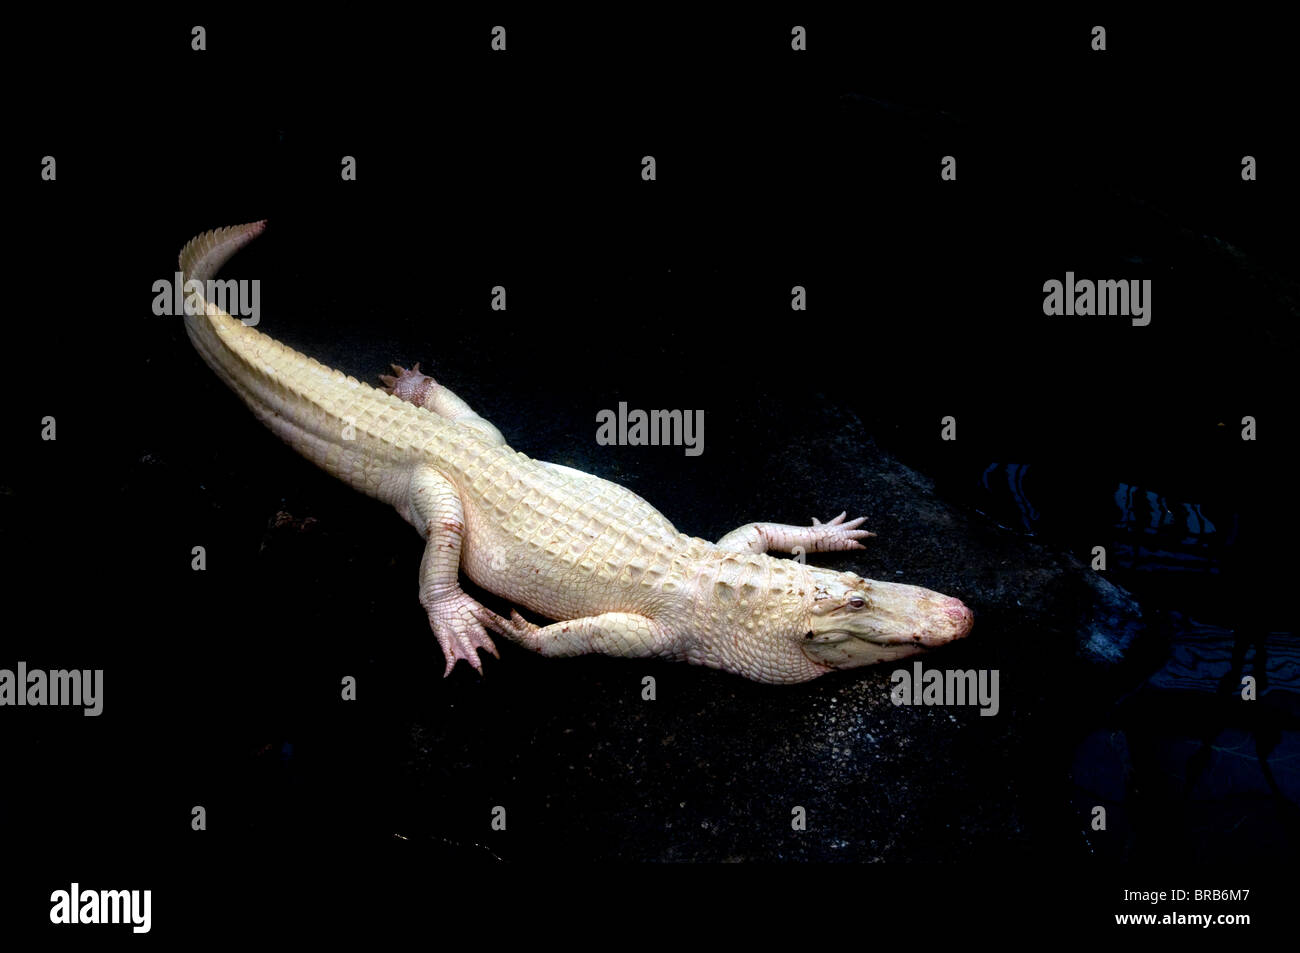 albino alligator-2008 Stock Photo